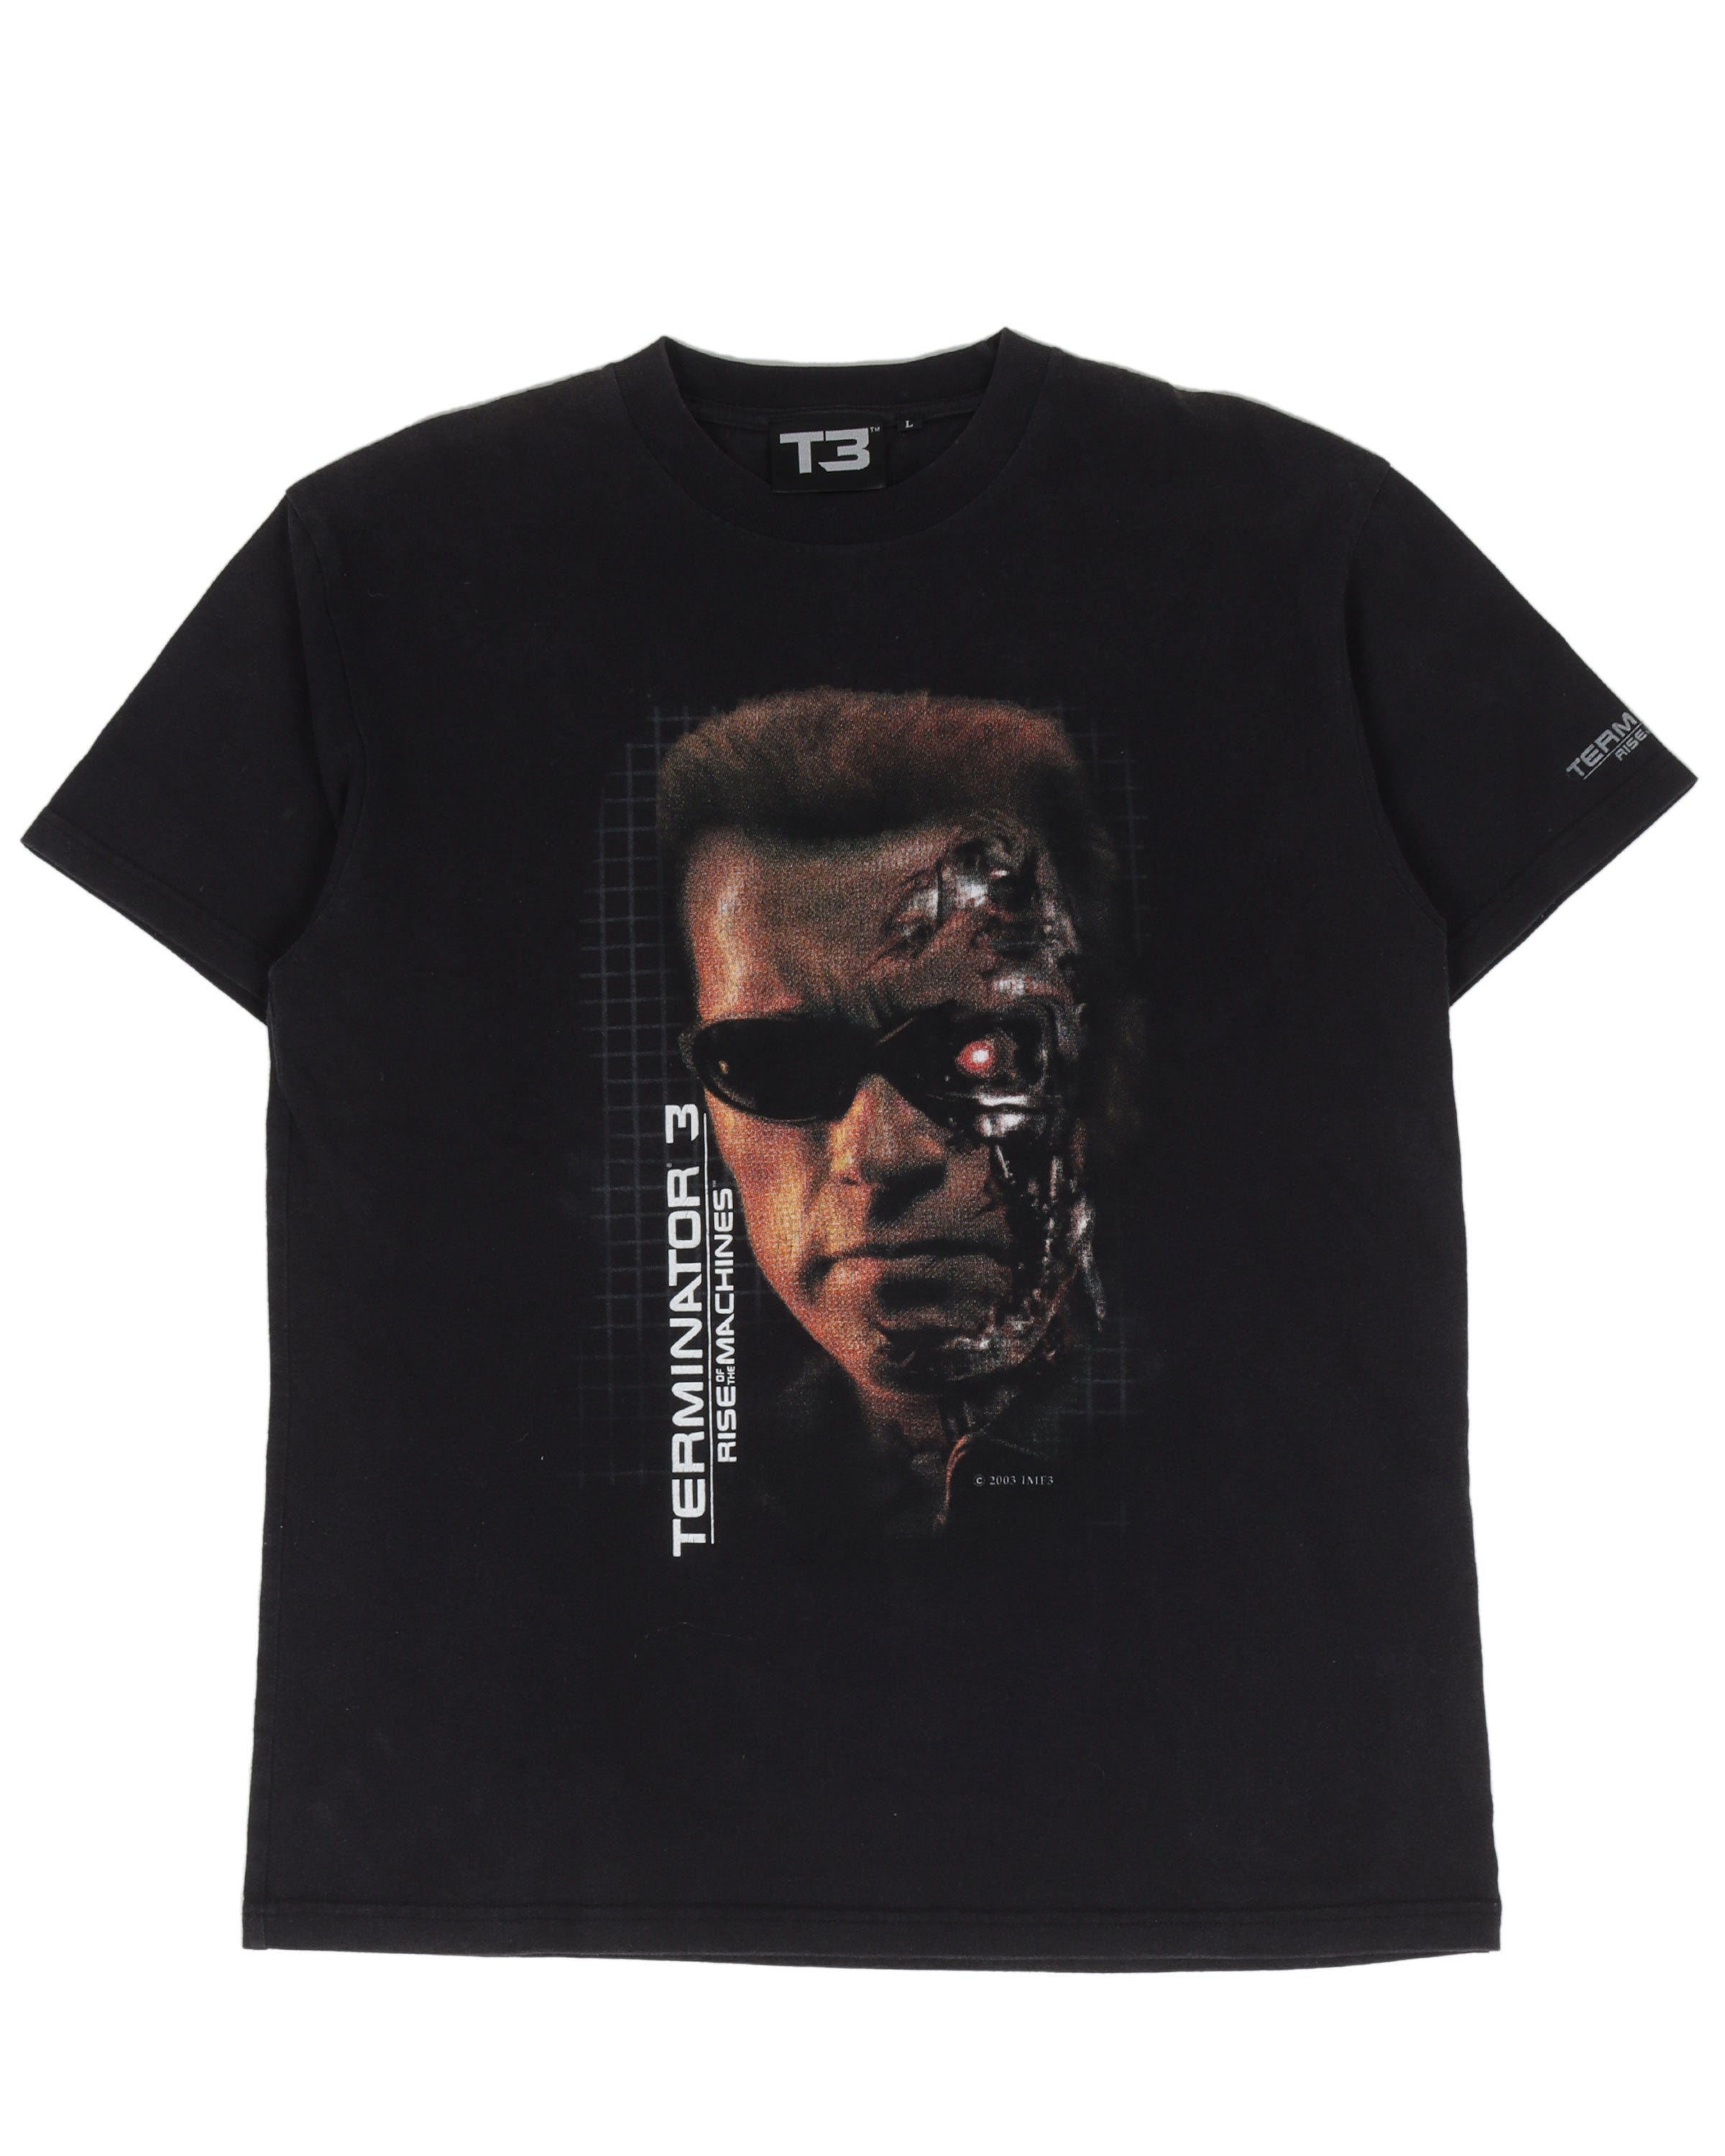 Terminator 3 "Rise of The Machines" T-Shirt